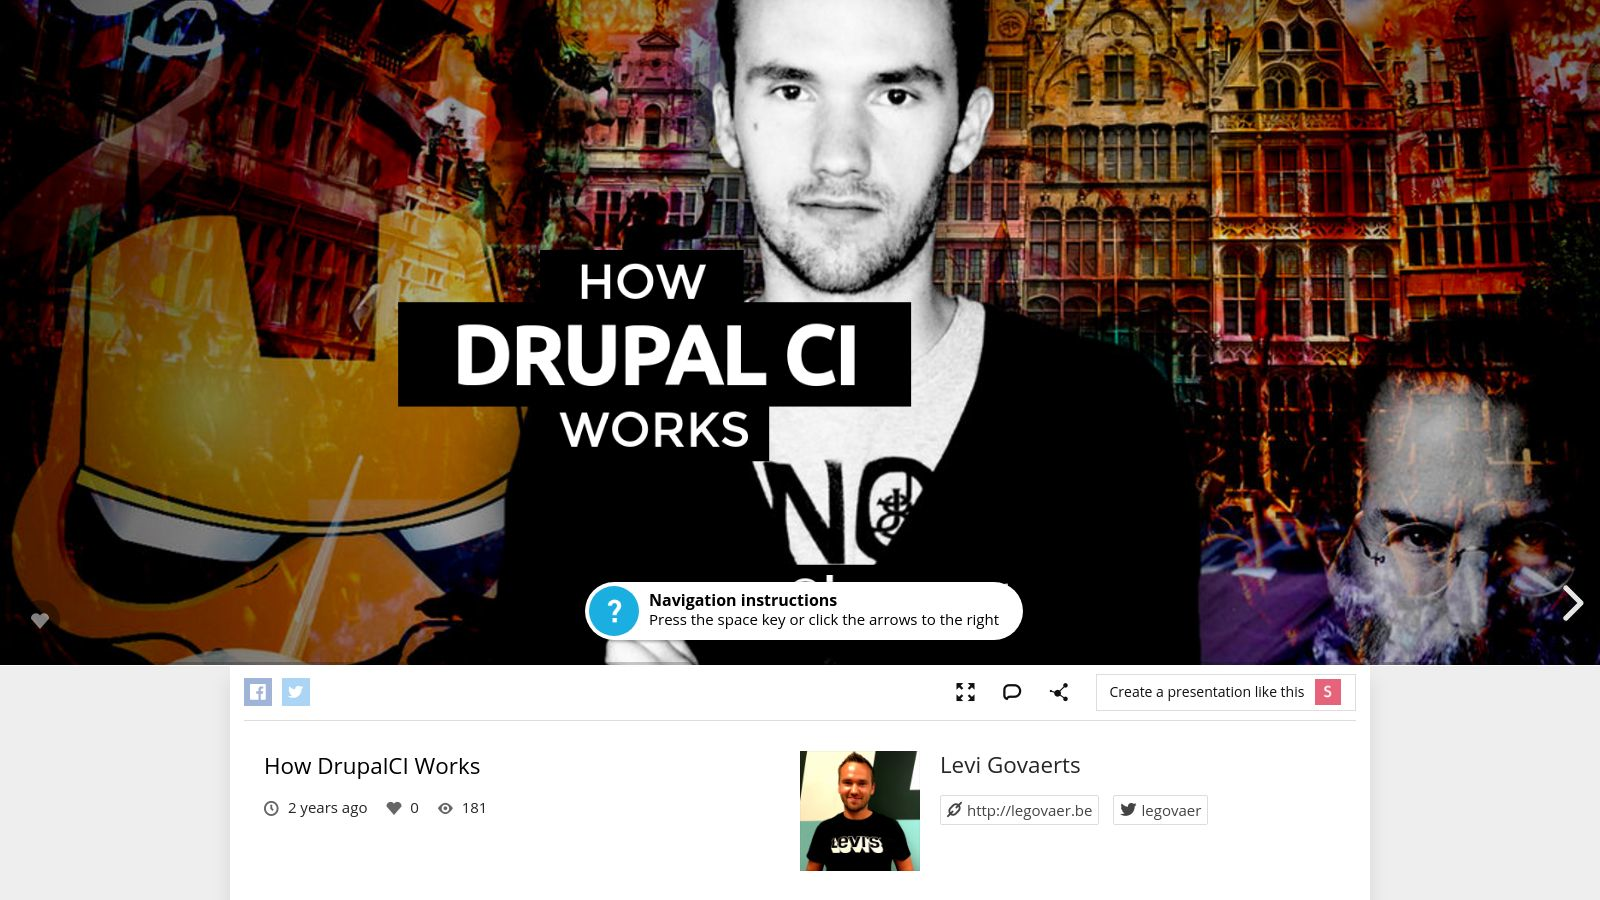 How DrupalCI Works